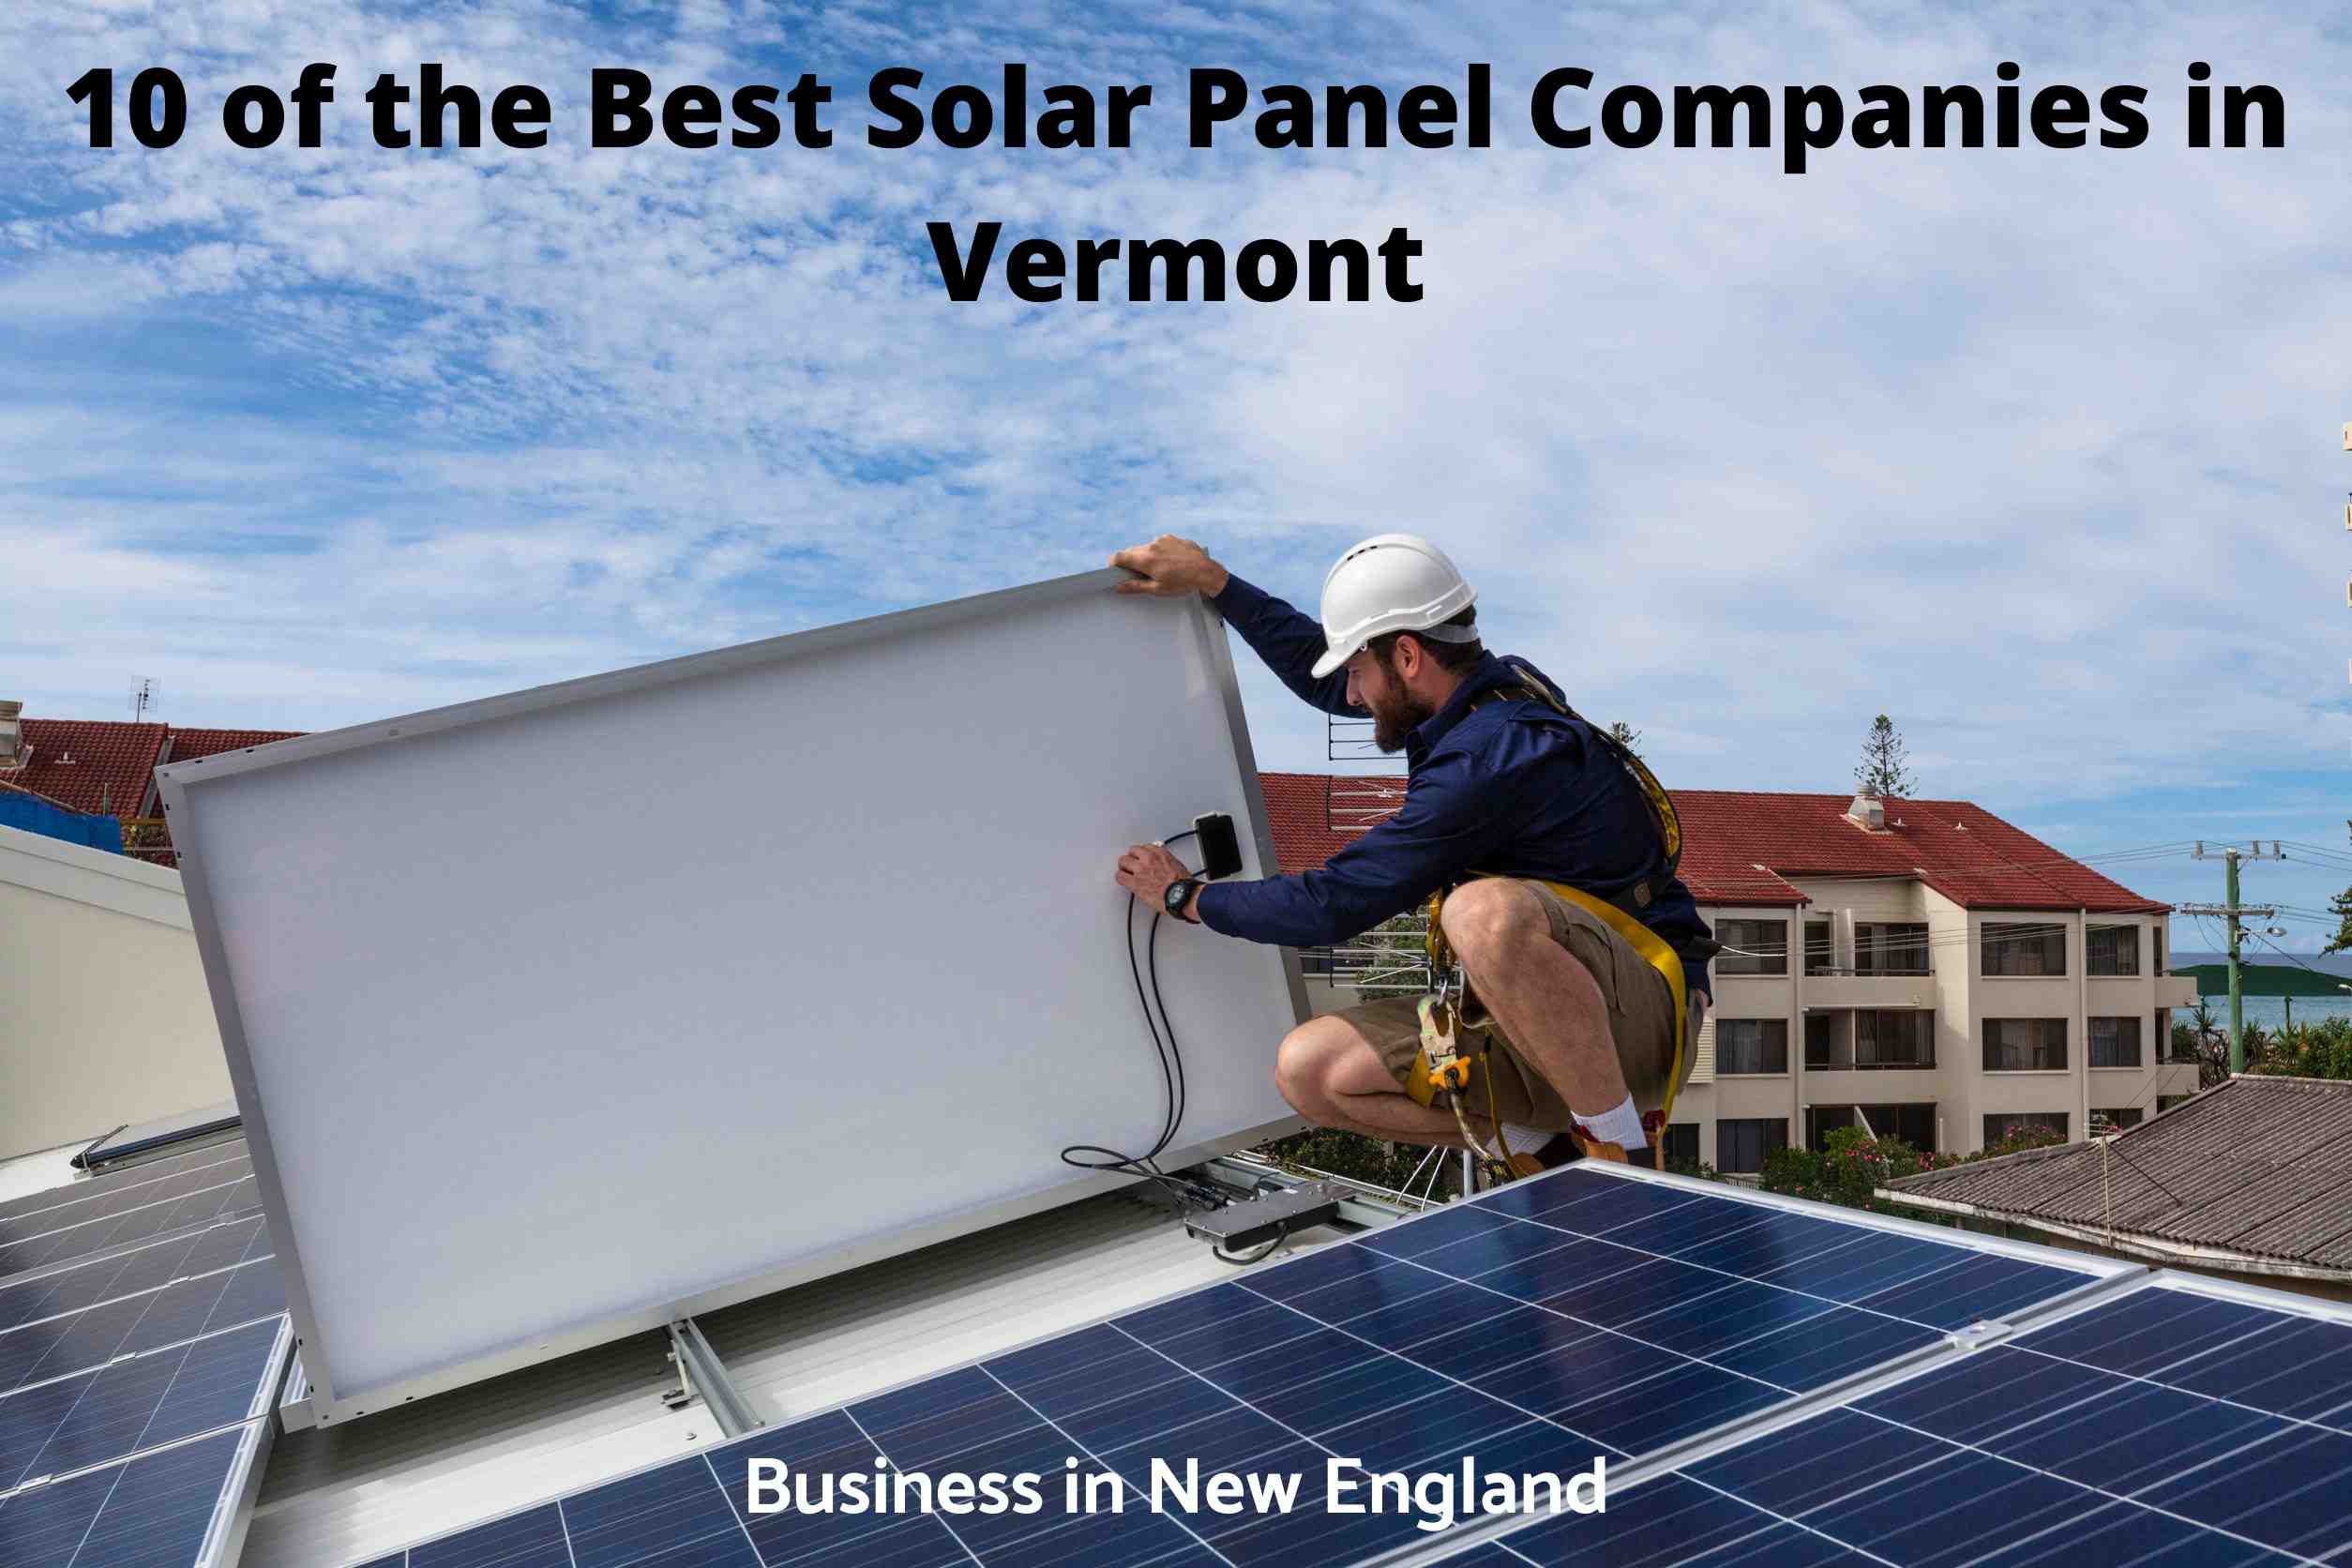 How do I choose a good solar company?